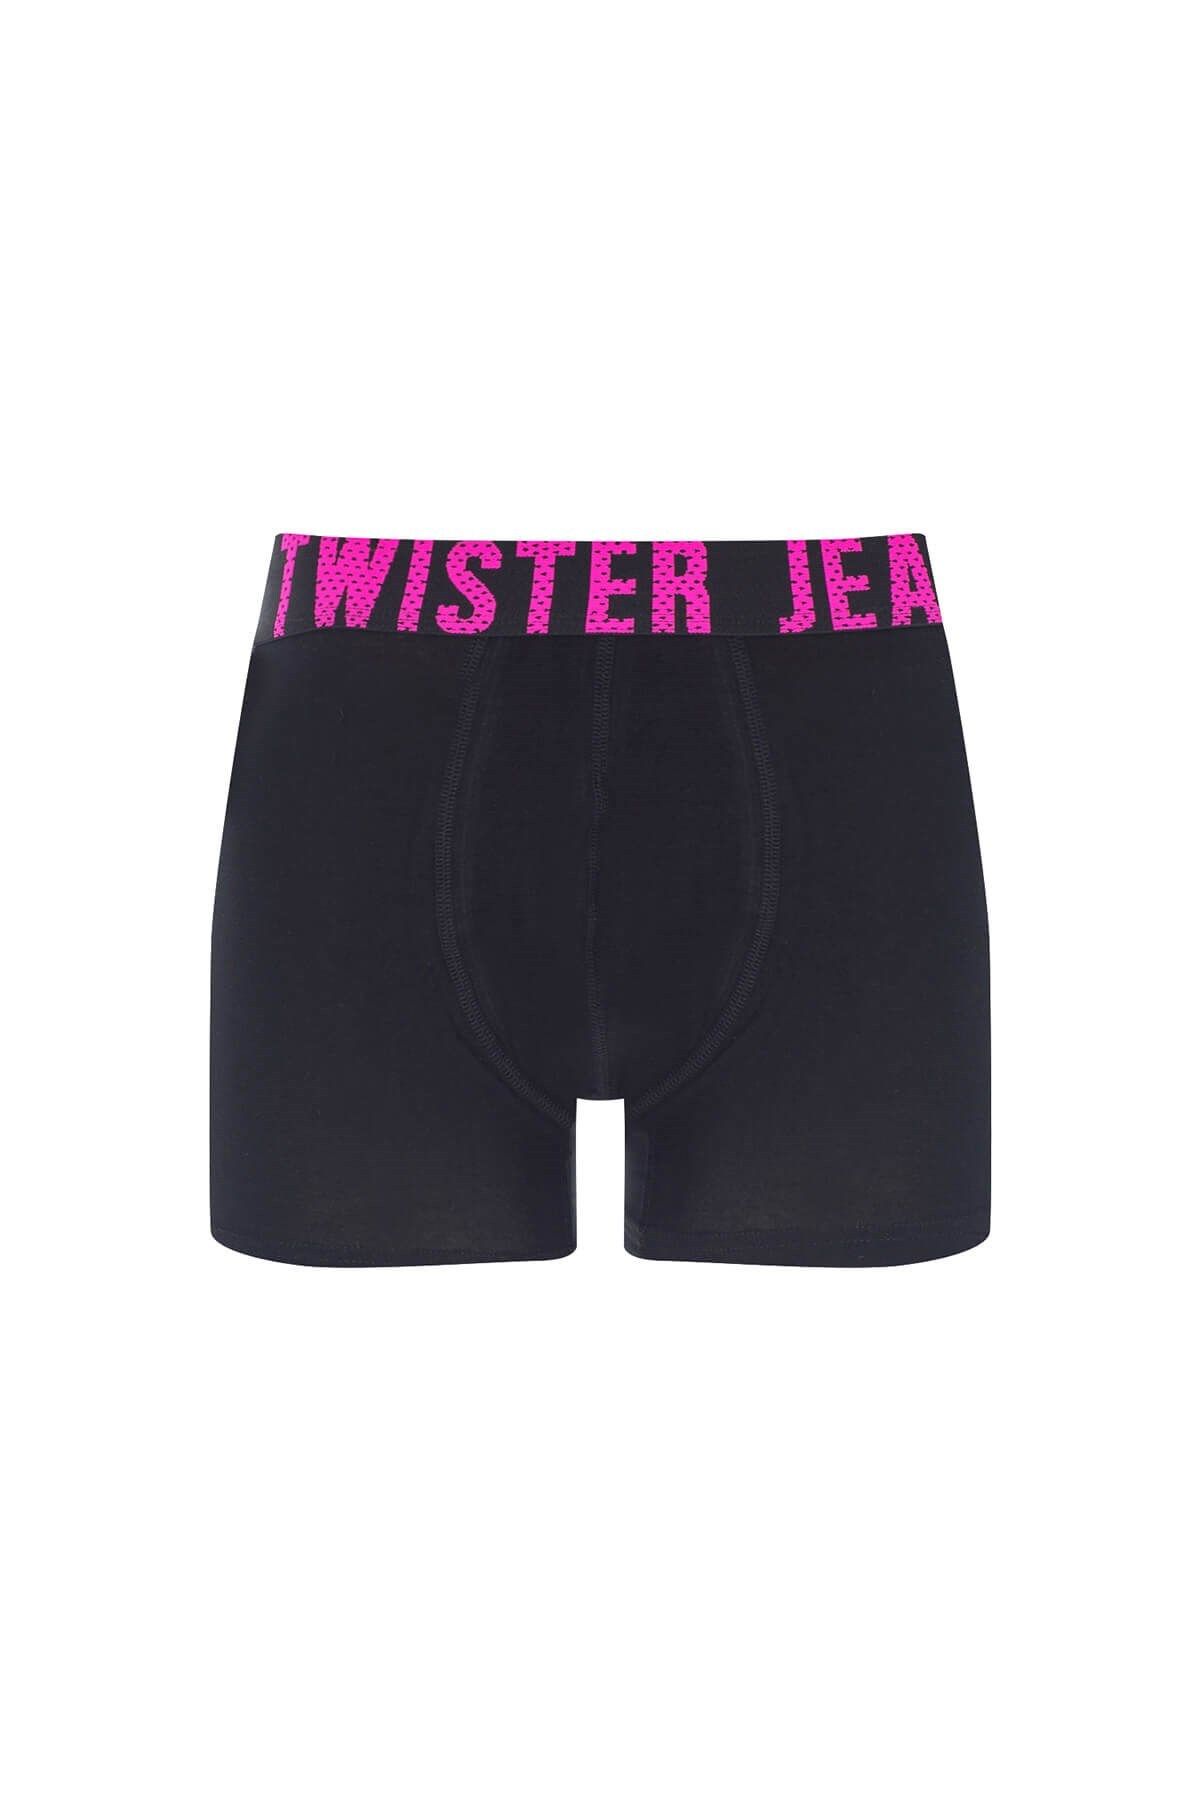 Twister Jeans Erkek Boxer Basıc Tekli 1001-02f Sıyah